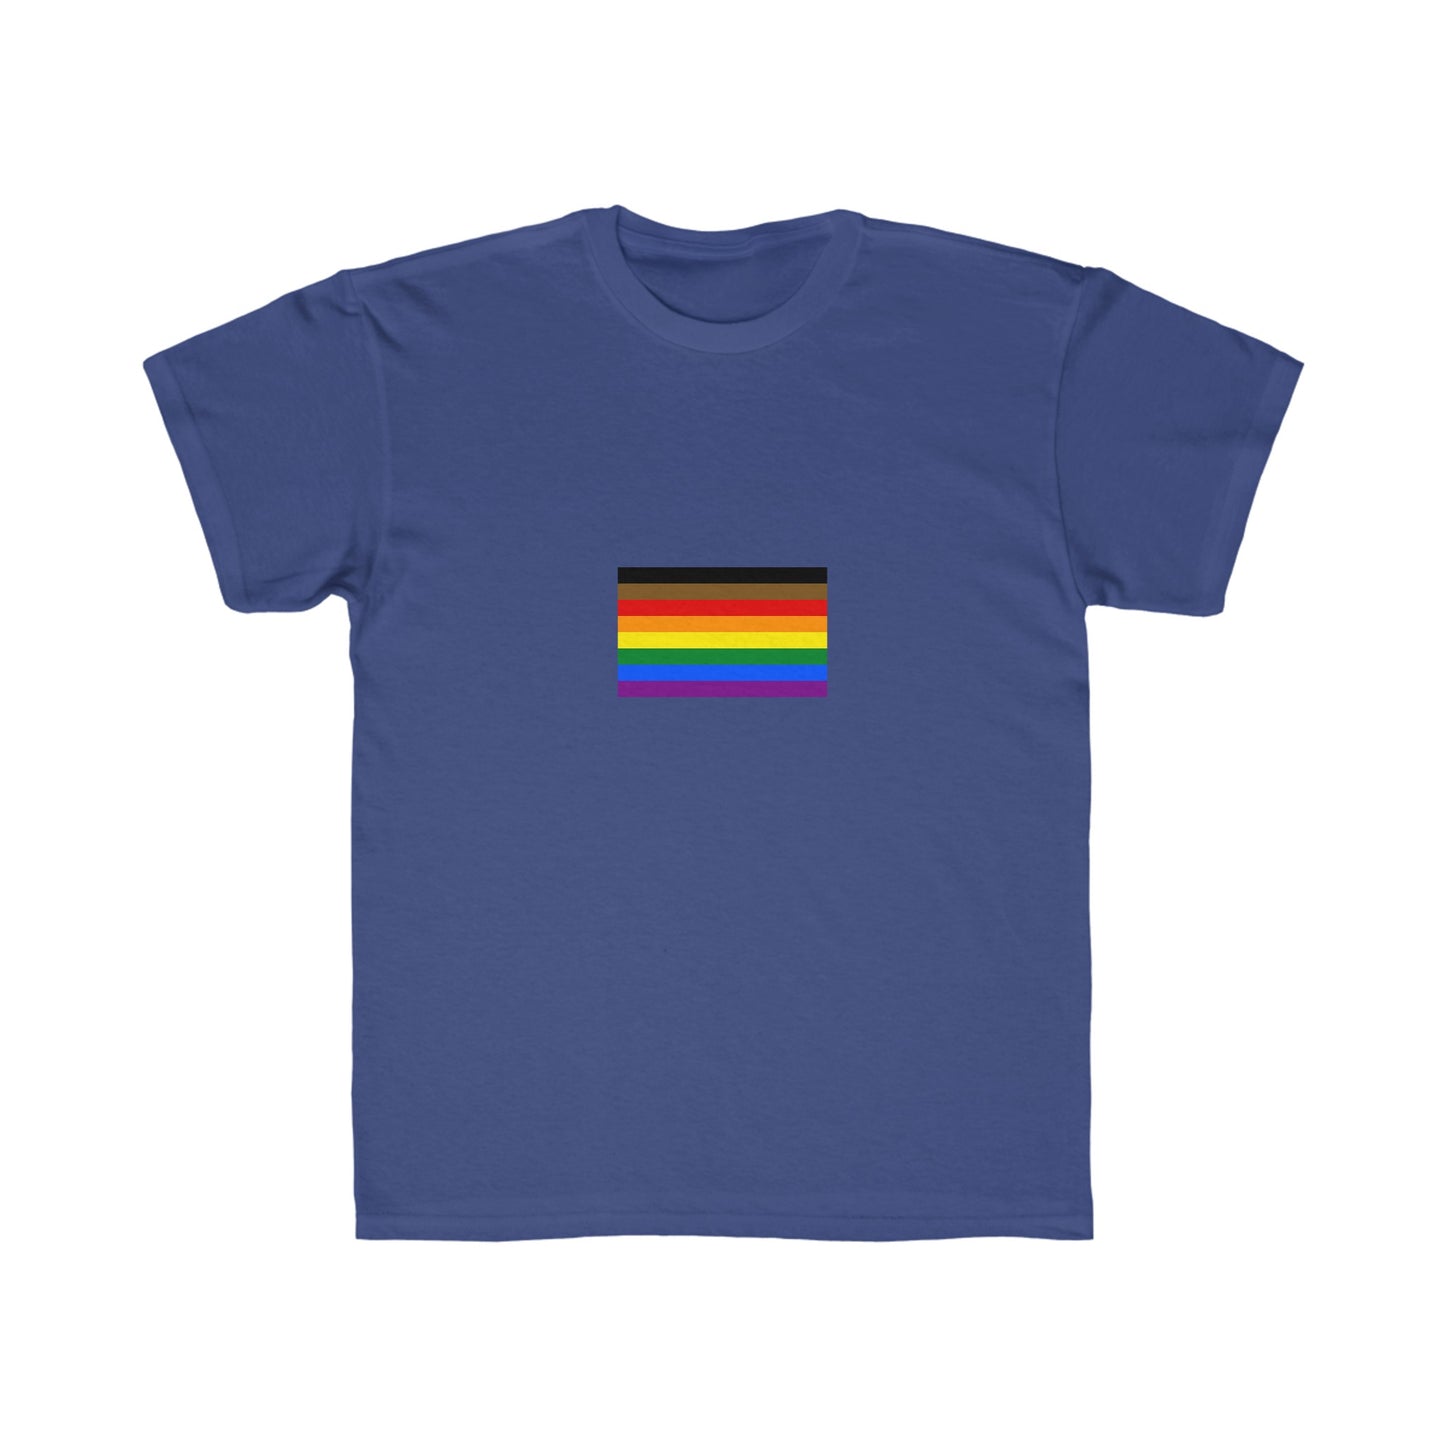 Philadelphia Pride Graphic Kids T-Shirt